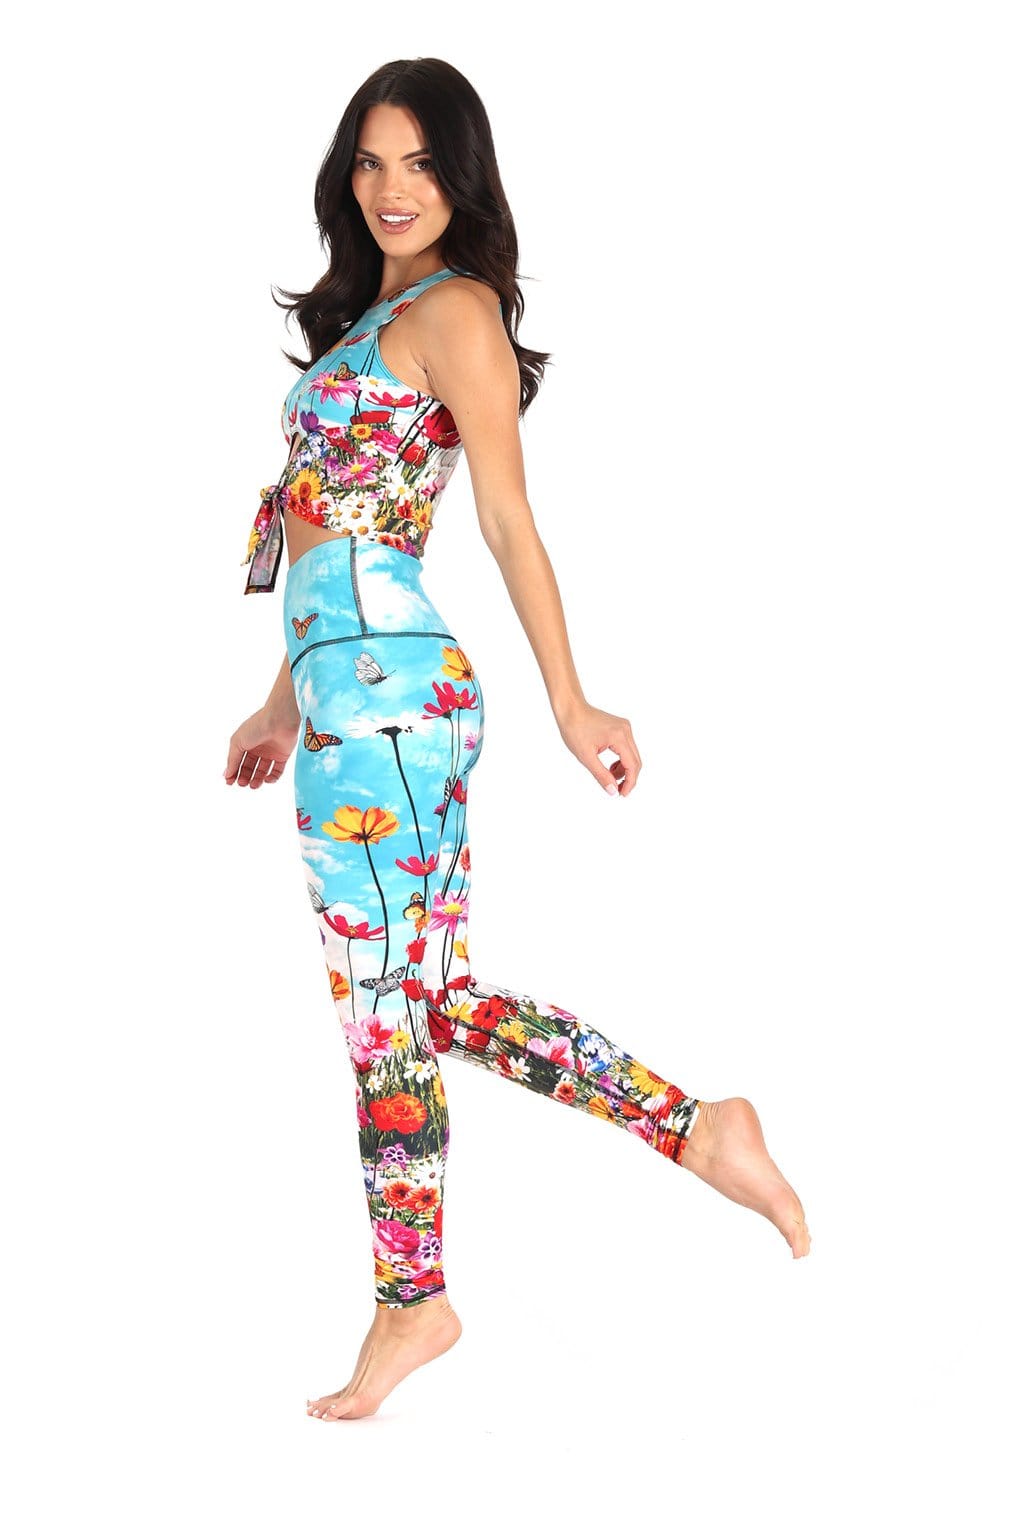 colorful printed yoga leggings by Tulipe Studio on : www..com/